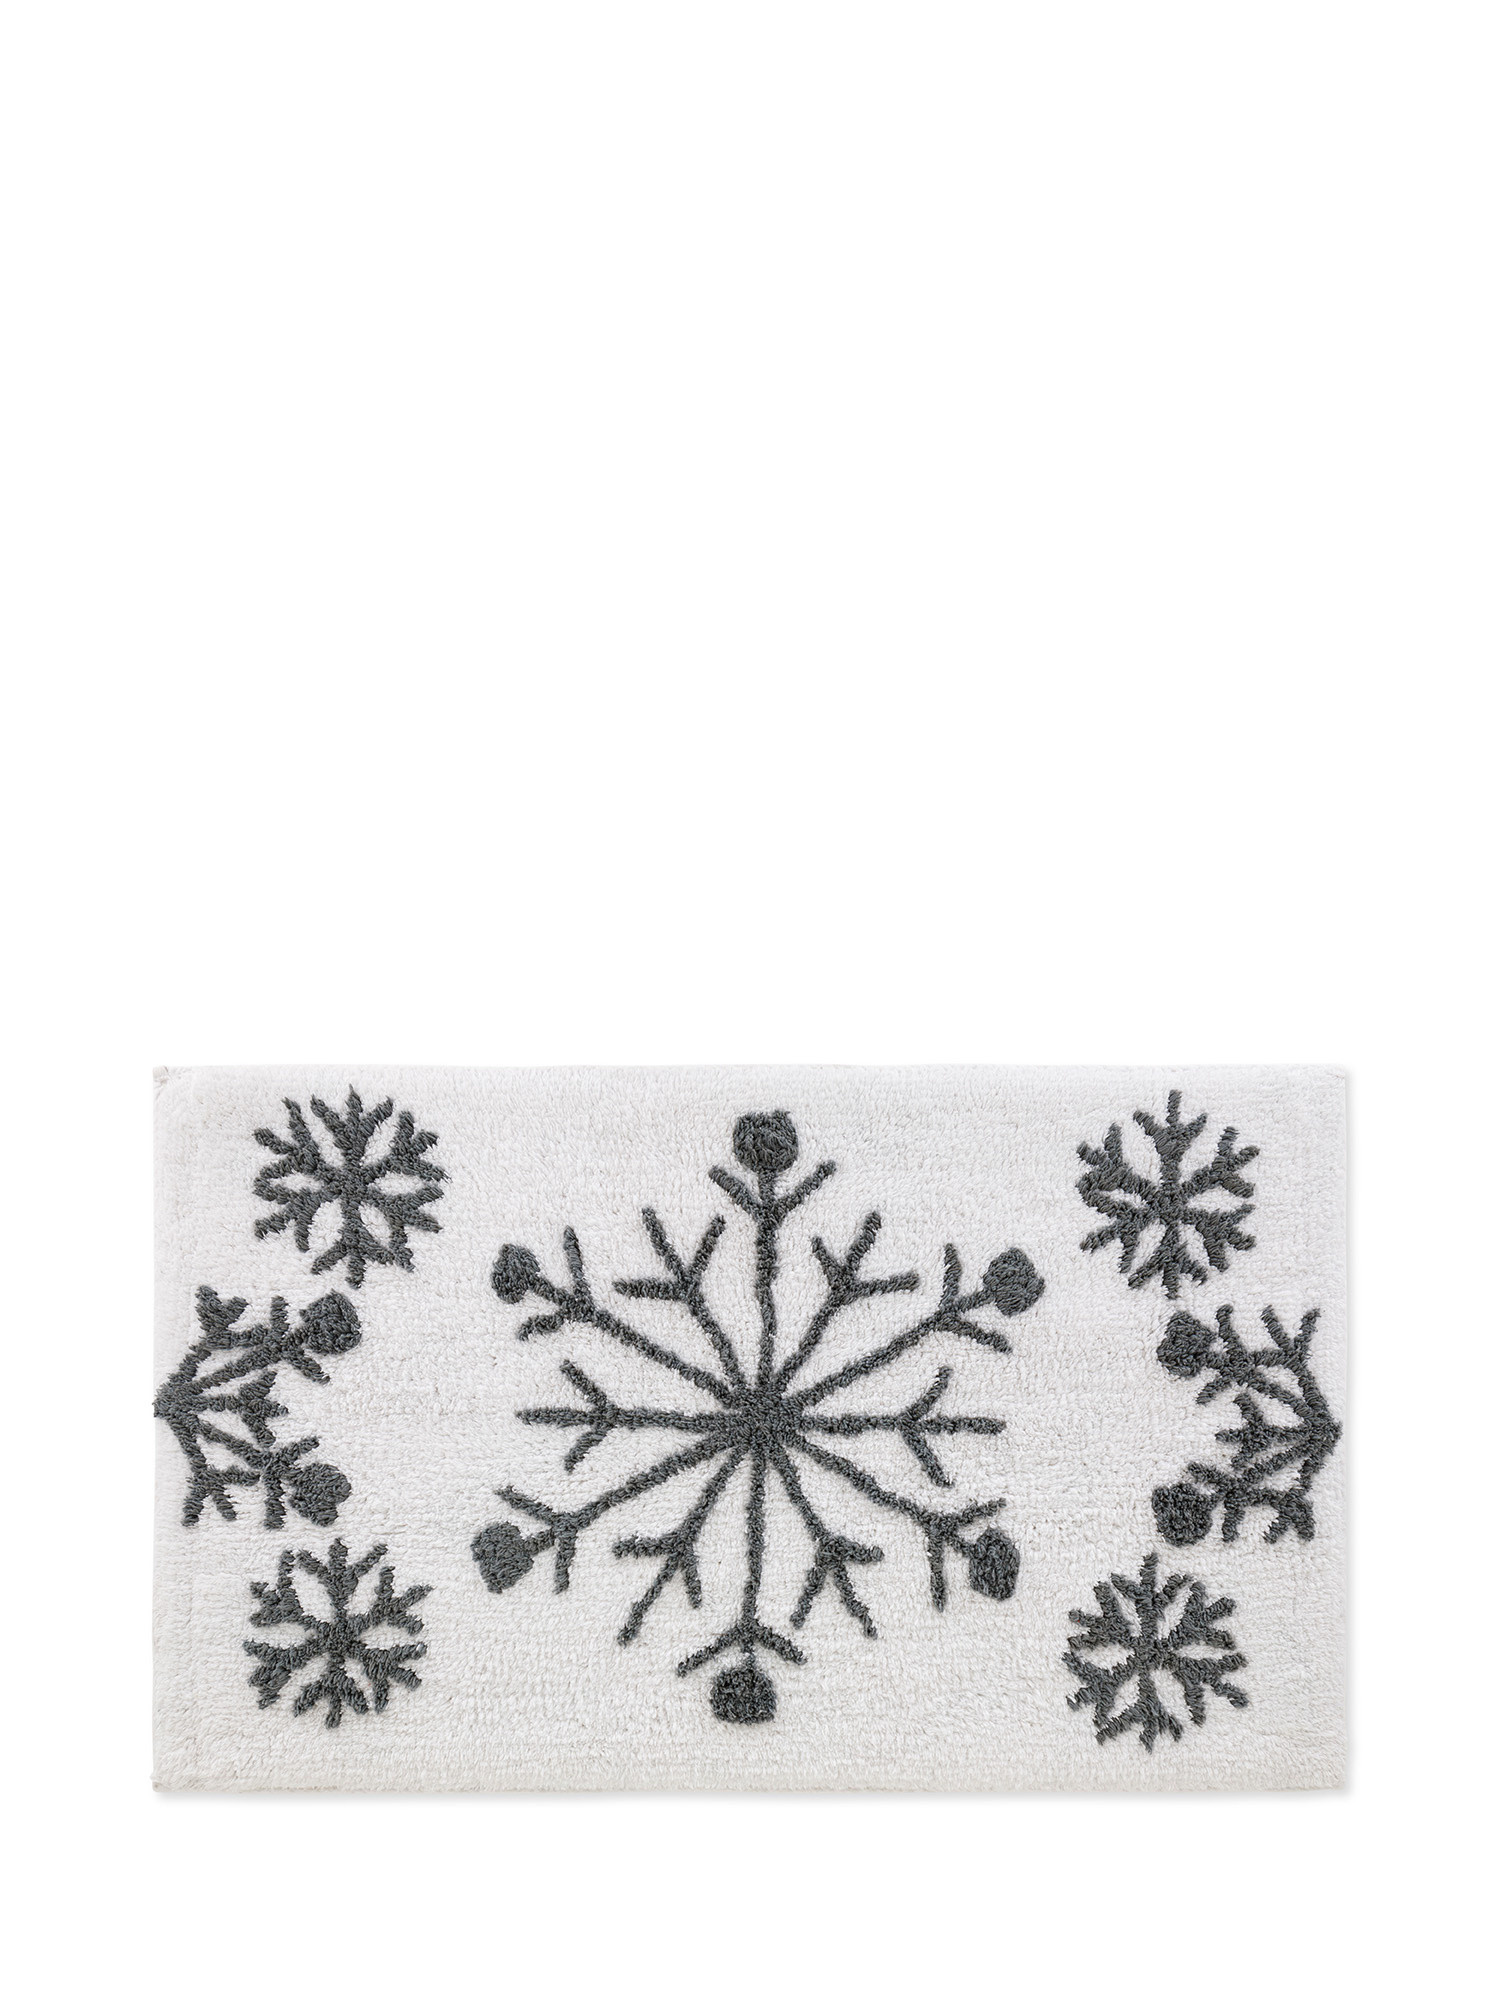 Tappeto bagno cotone ricamo fiocchi di neve, Bianco, large image number 0